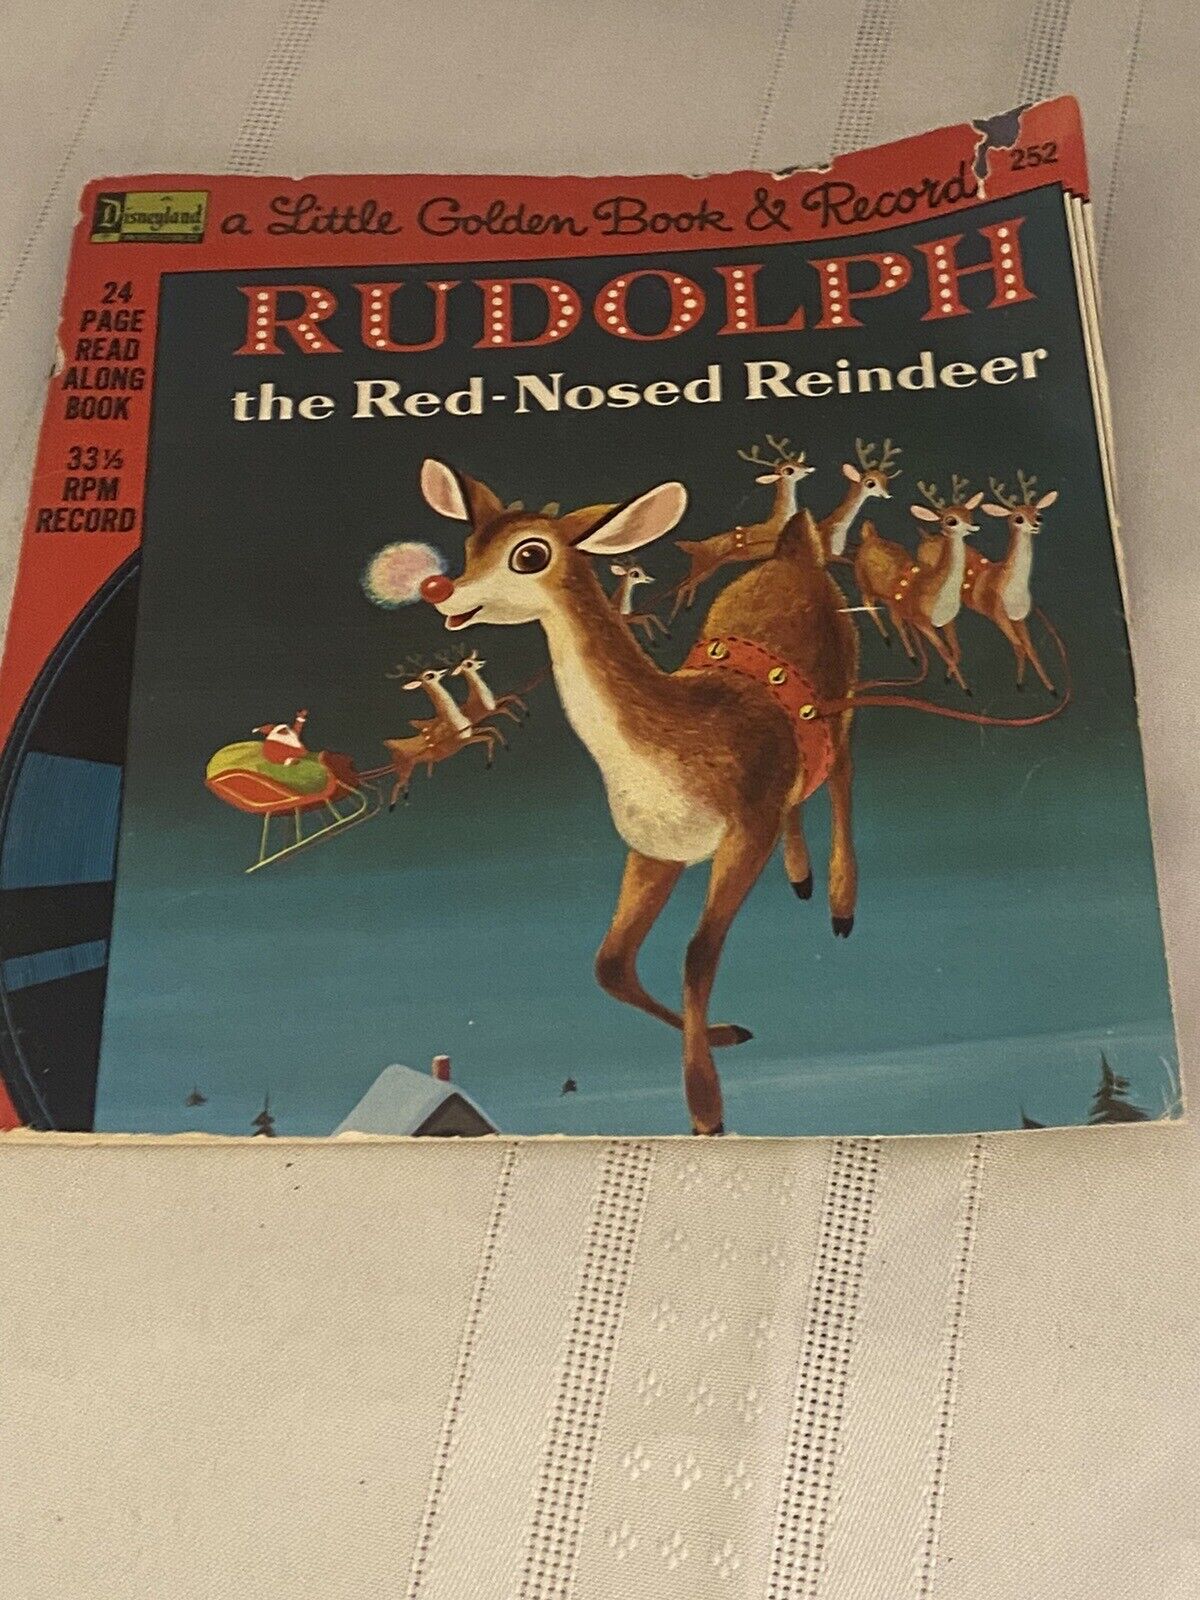 Rudolph the Red-Nosed Reindeer-Little Golden Book & Record-Disneyland-1965